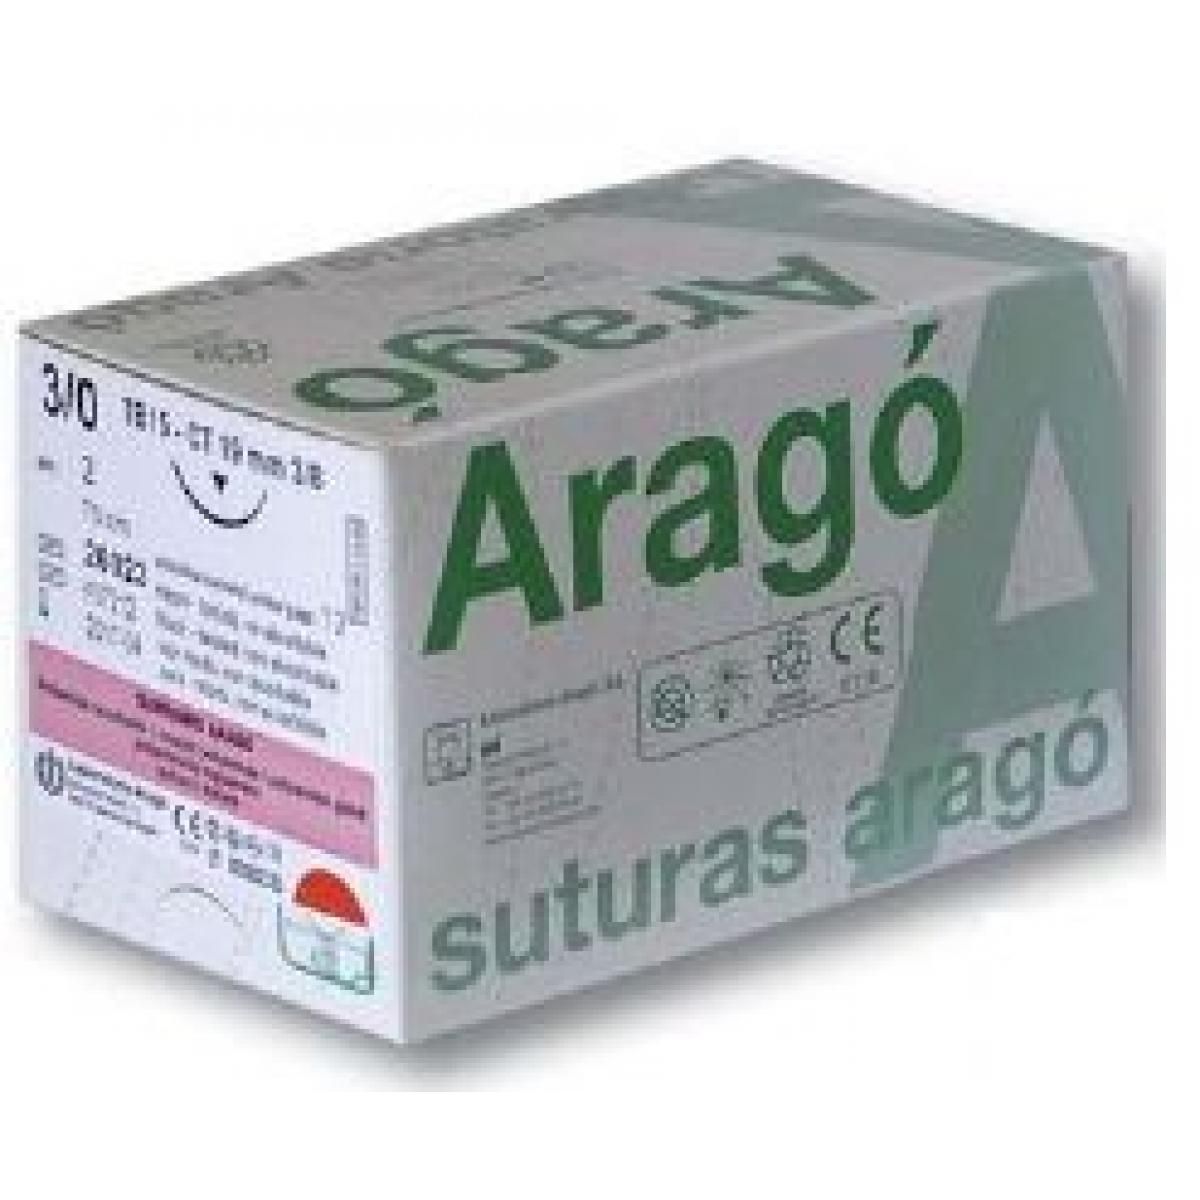 SUTURA ARAGO SUPRAMID 3 0 TB15 36U -